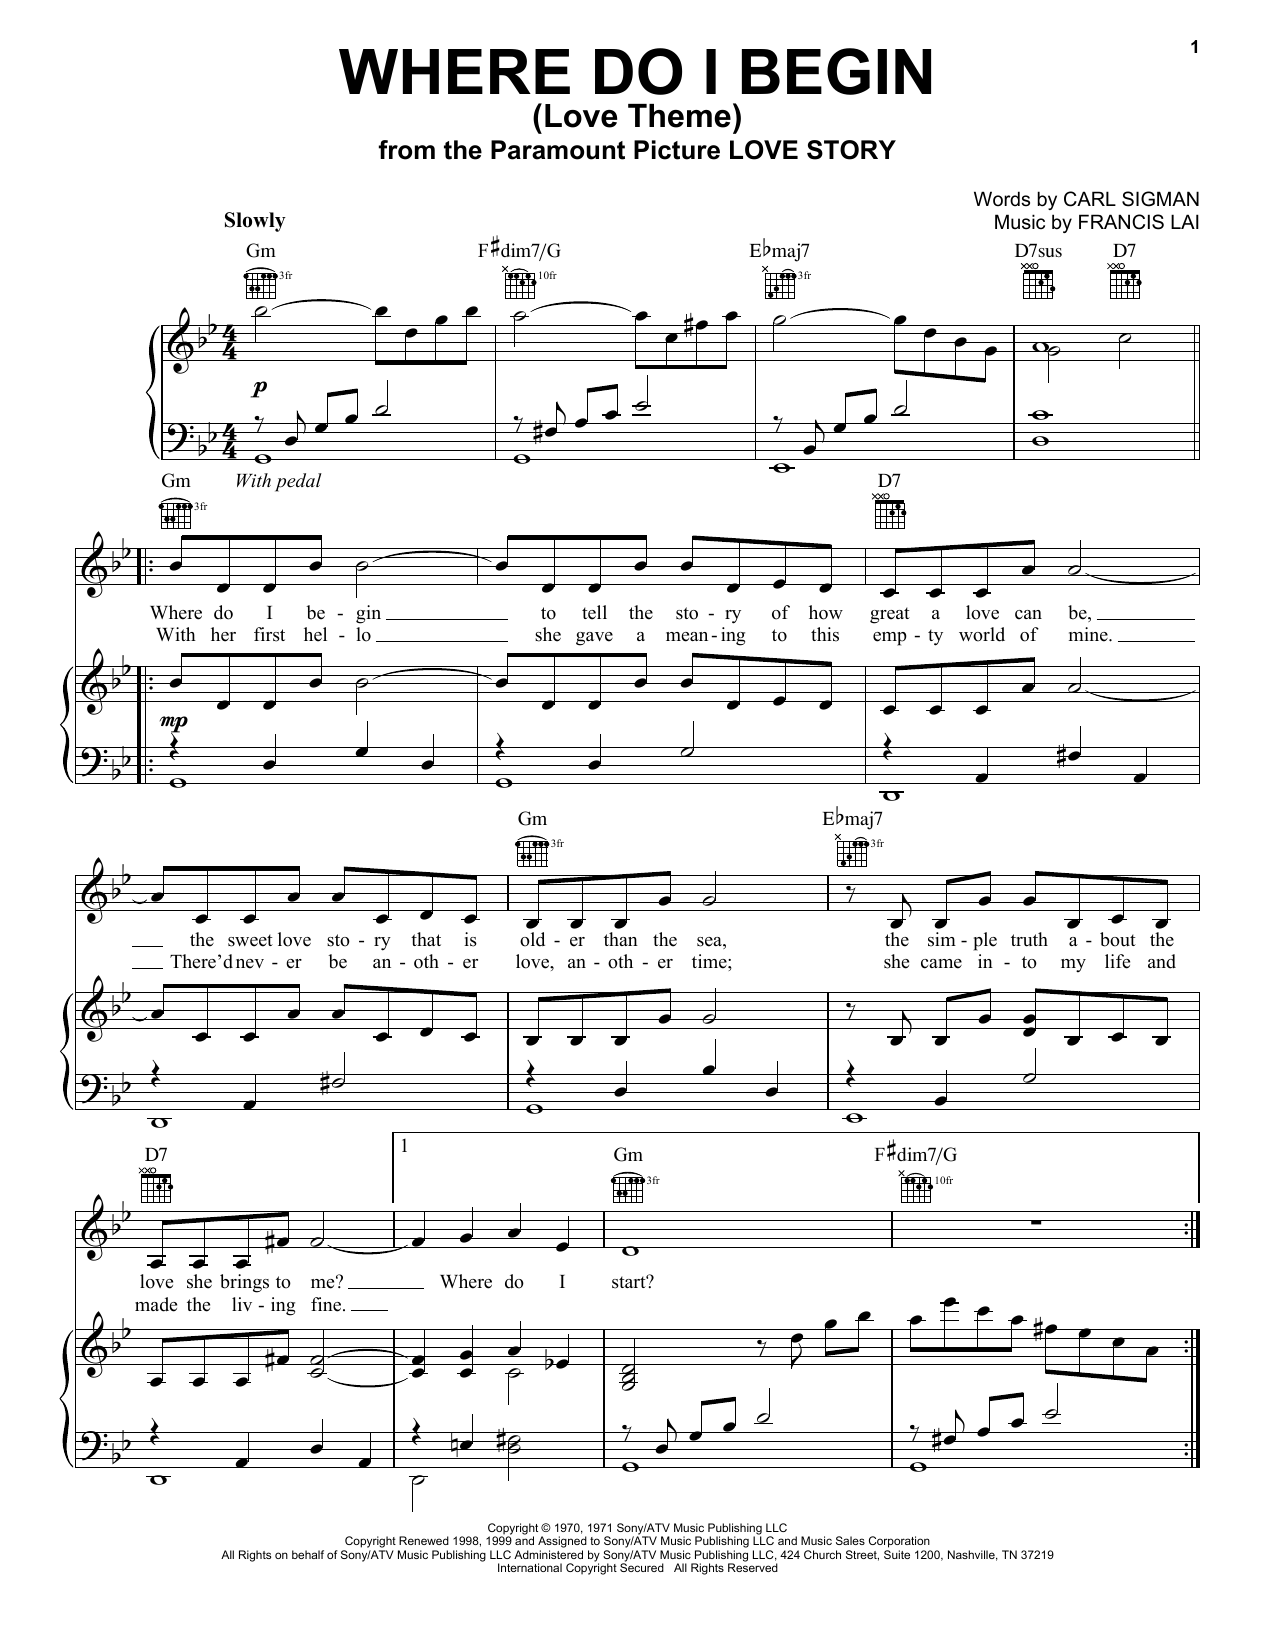 Where Do I Begin (Love Theme) sheet music